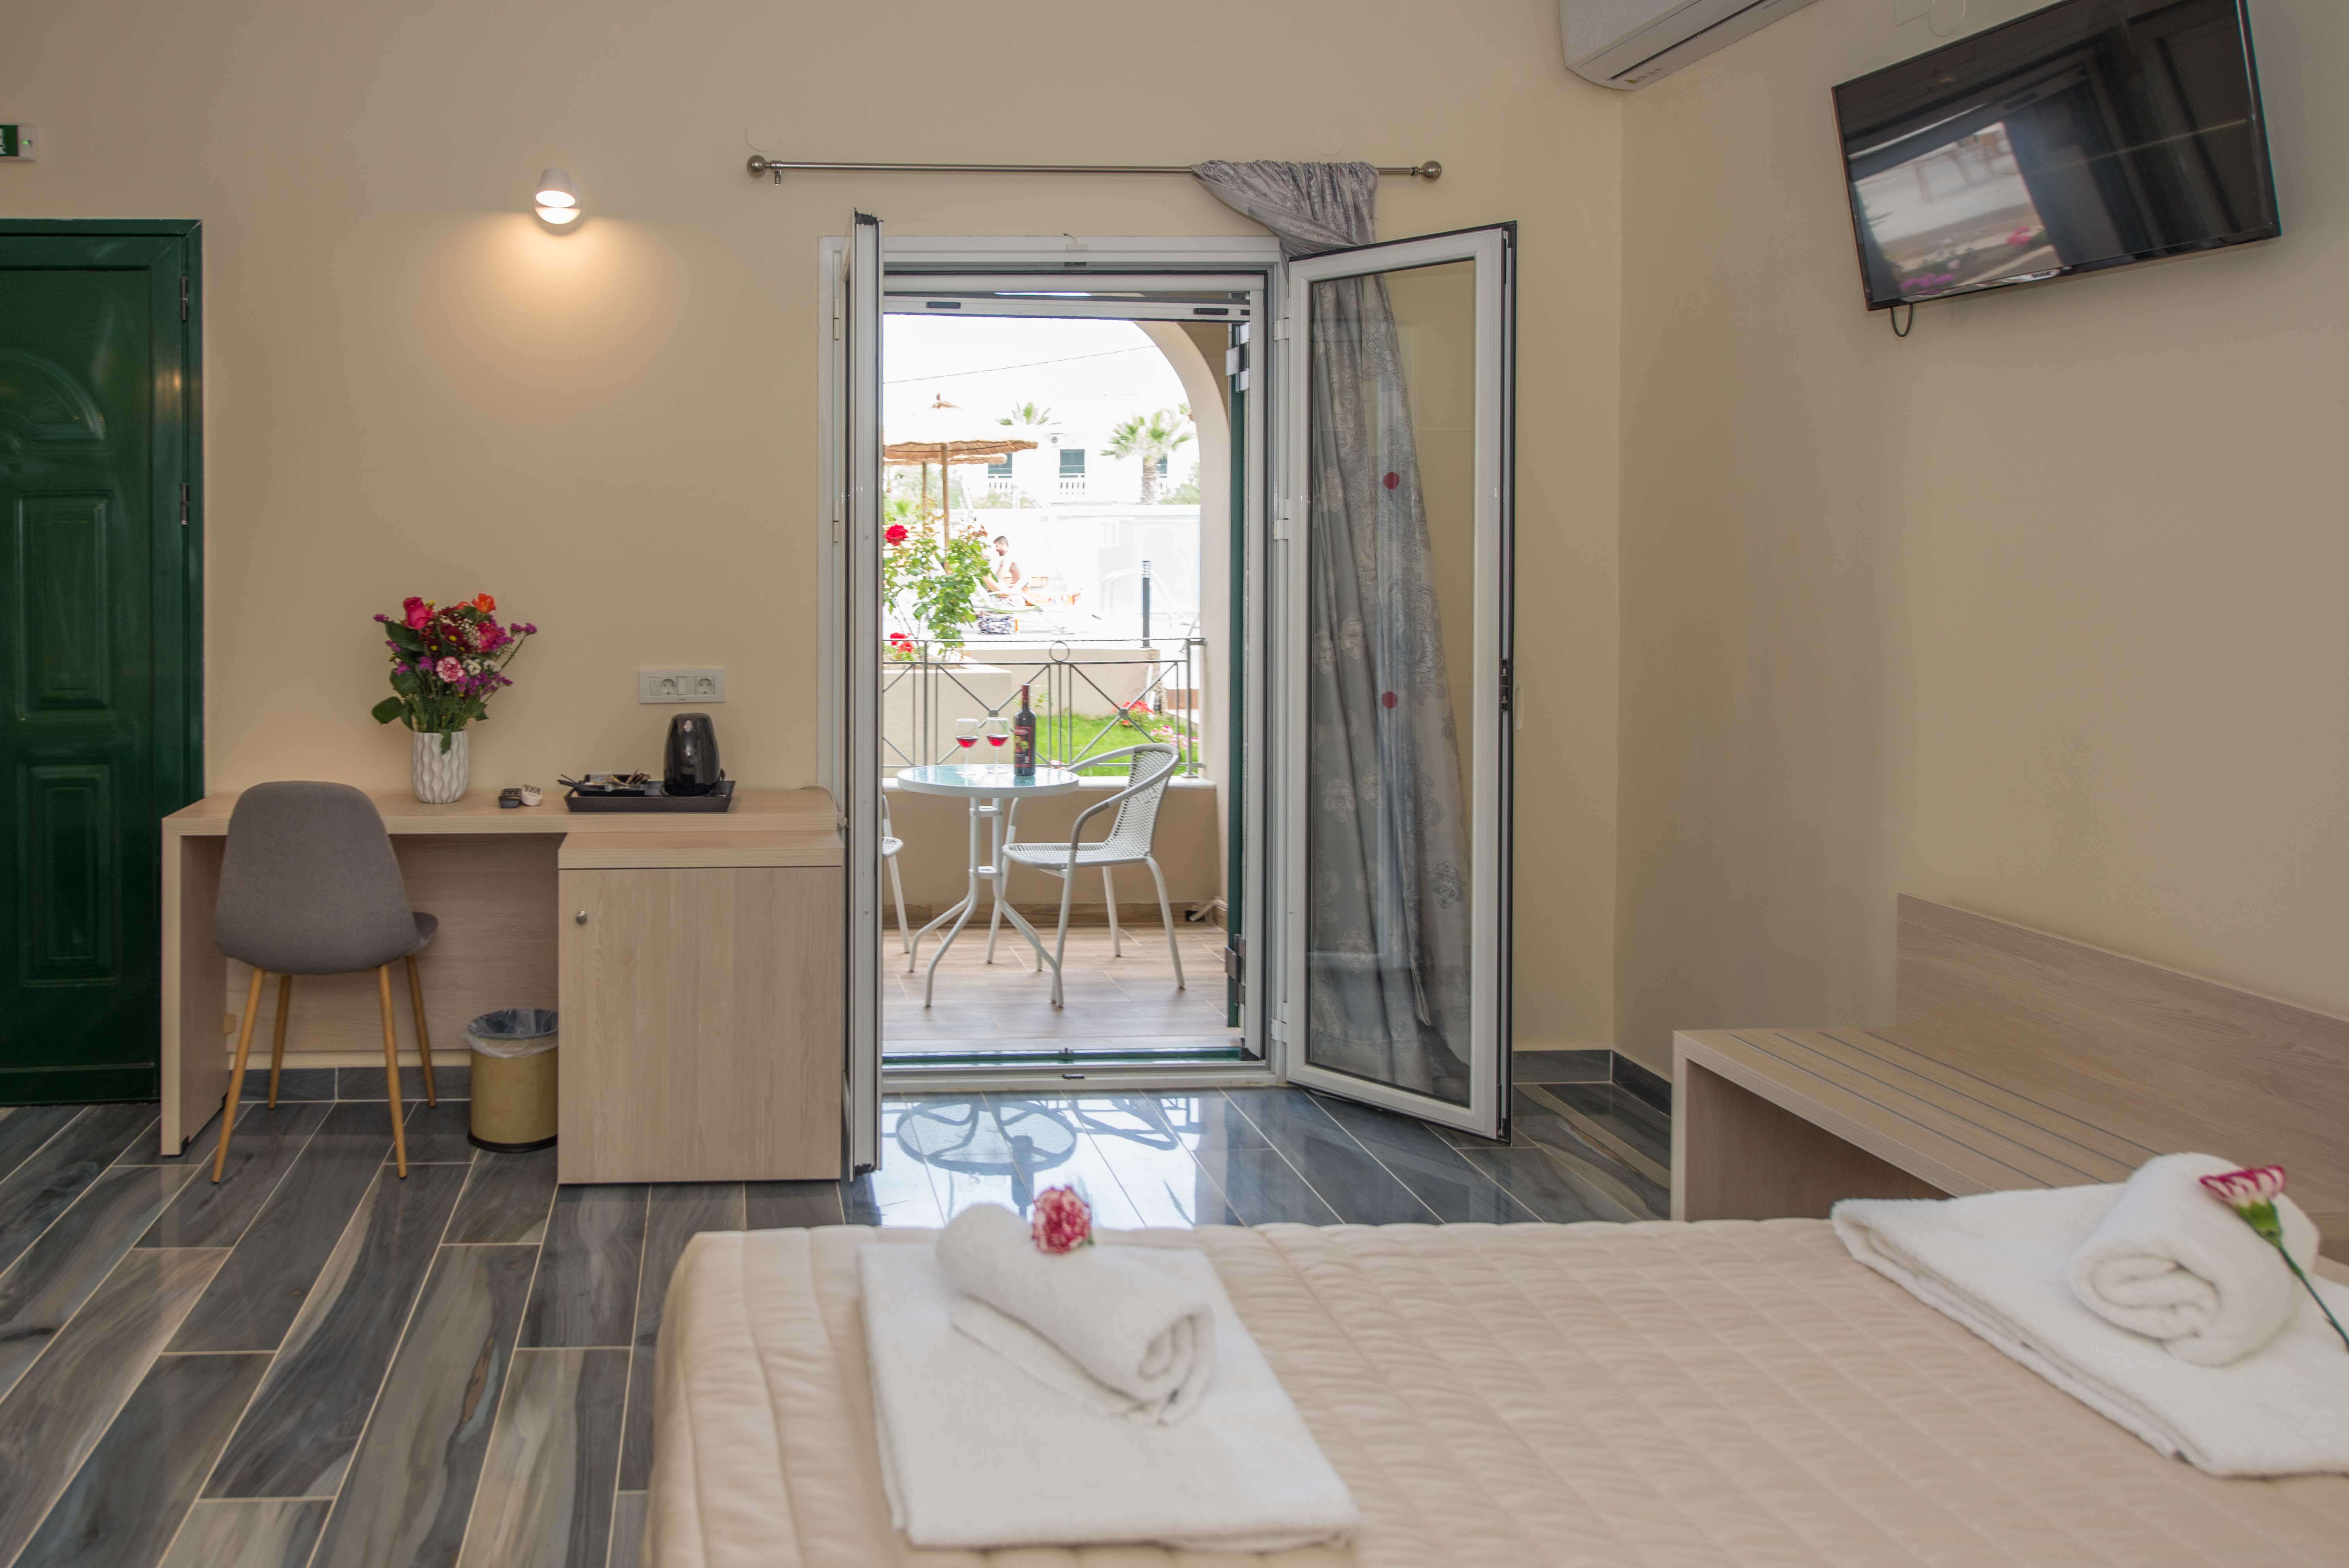 Amour Holiday Resort Corfu Nino Hotels